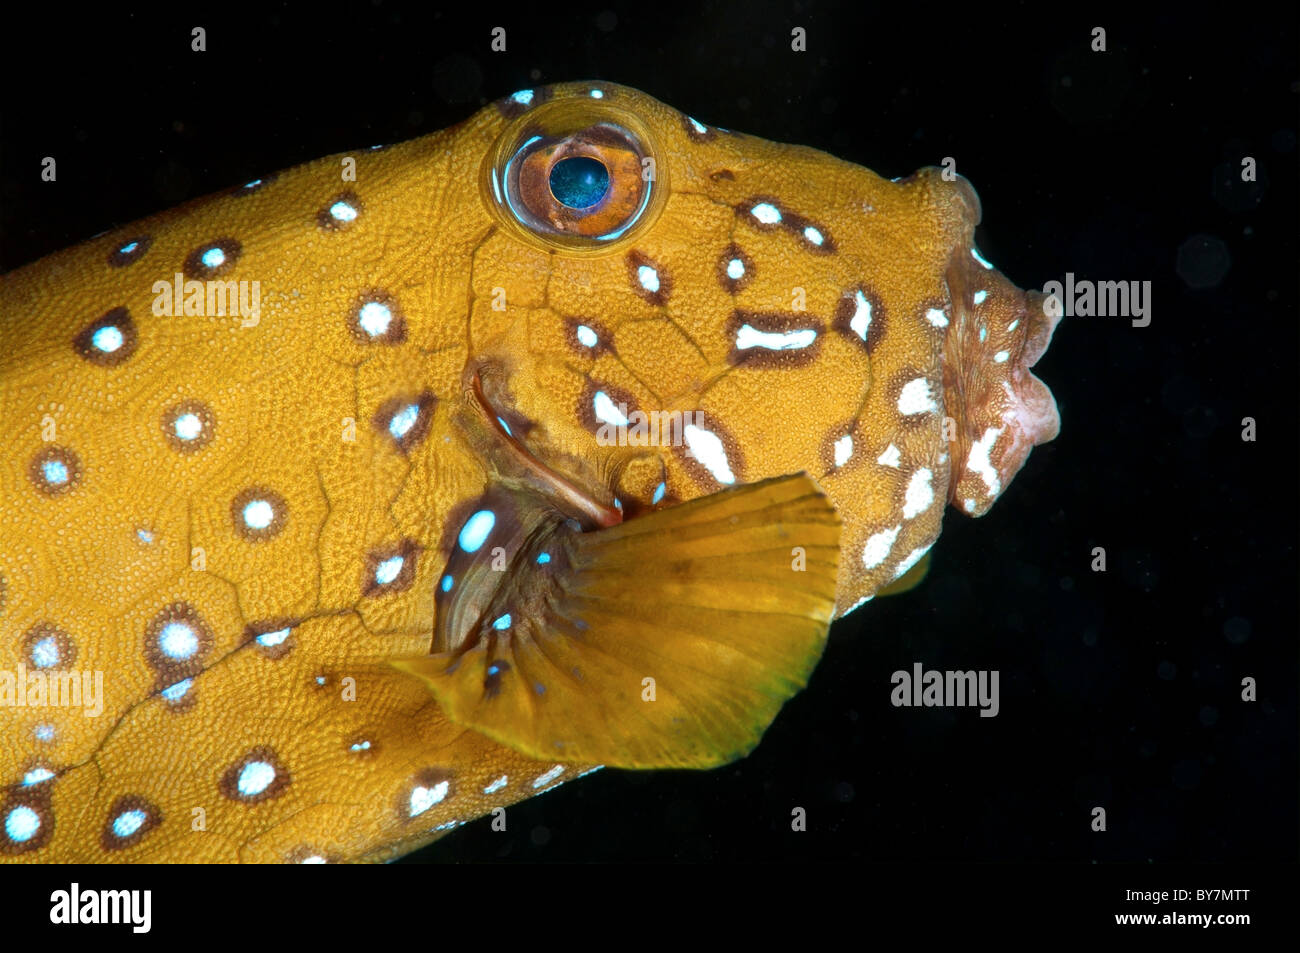 Black-spotted boxfish, Blue-spotted boxfish or Yellow boxfish (Ostracion cubicus) Red sea, Egypt Stock Photo